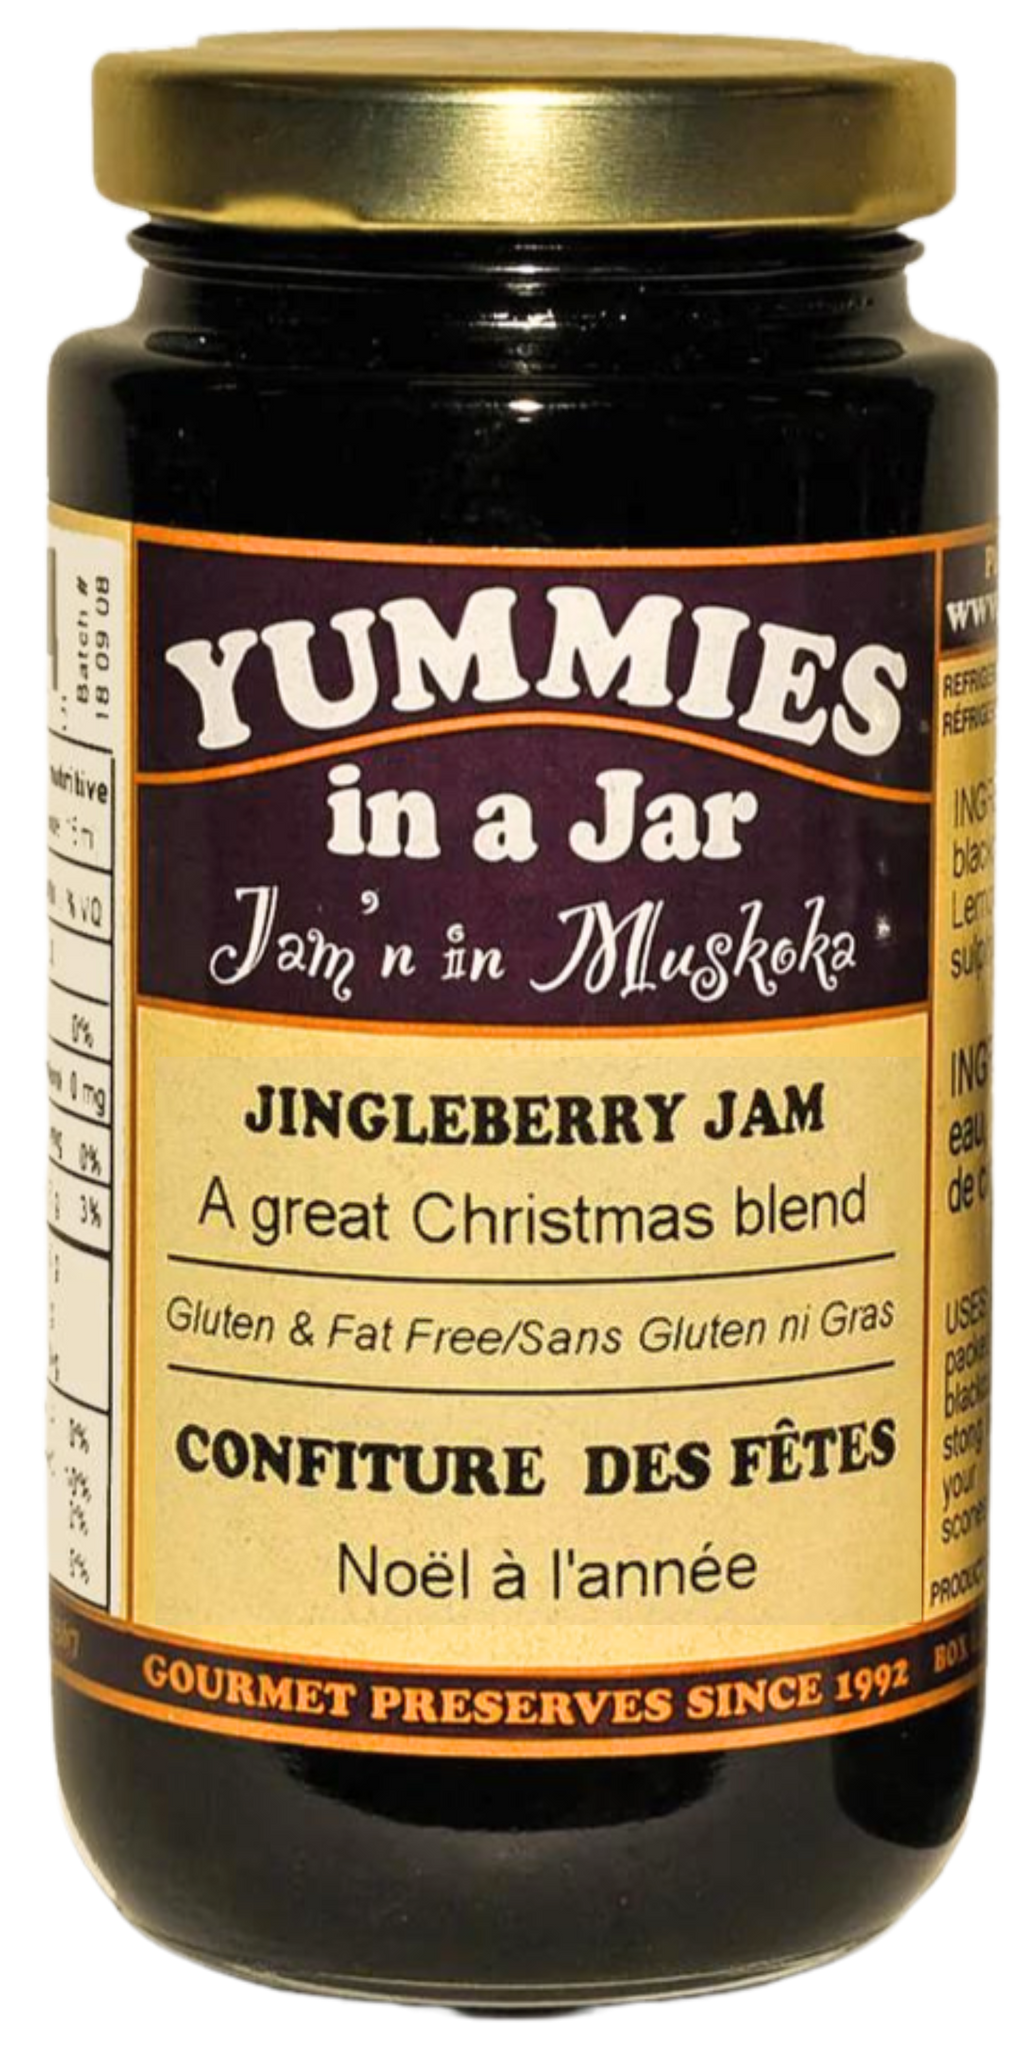 Yummies in a Jar jingleberry jam